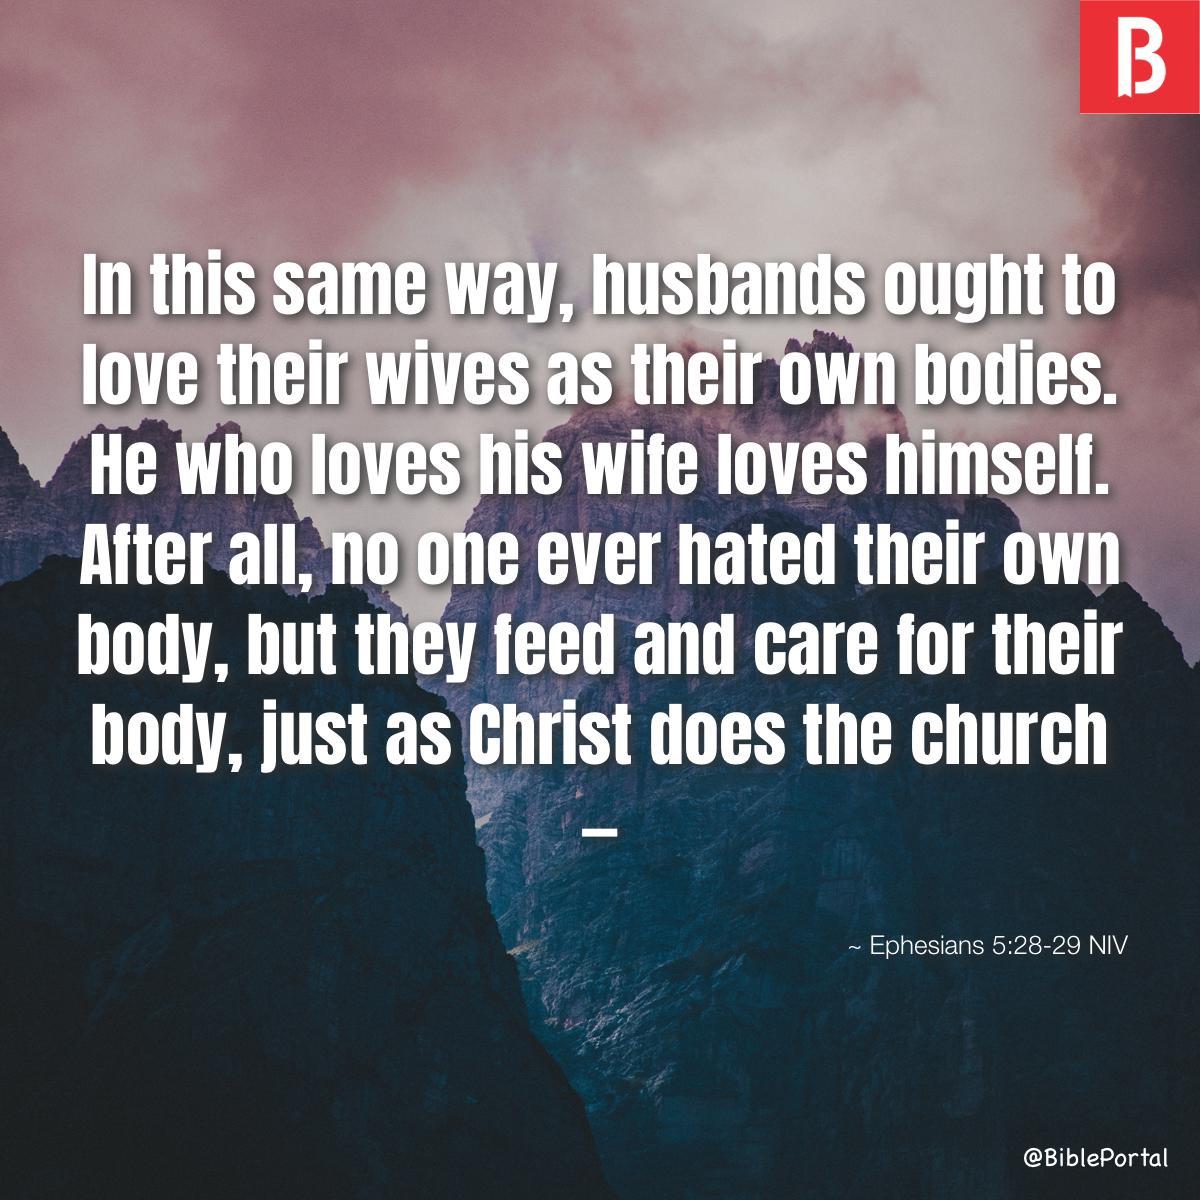 Ephesians 5:28-29 NIV